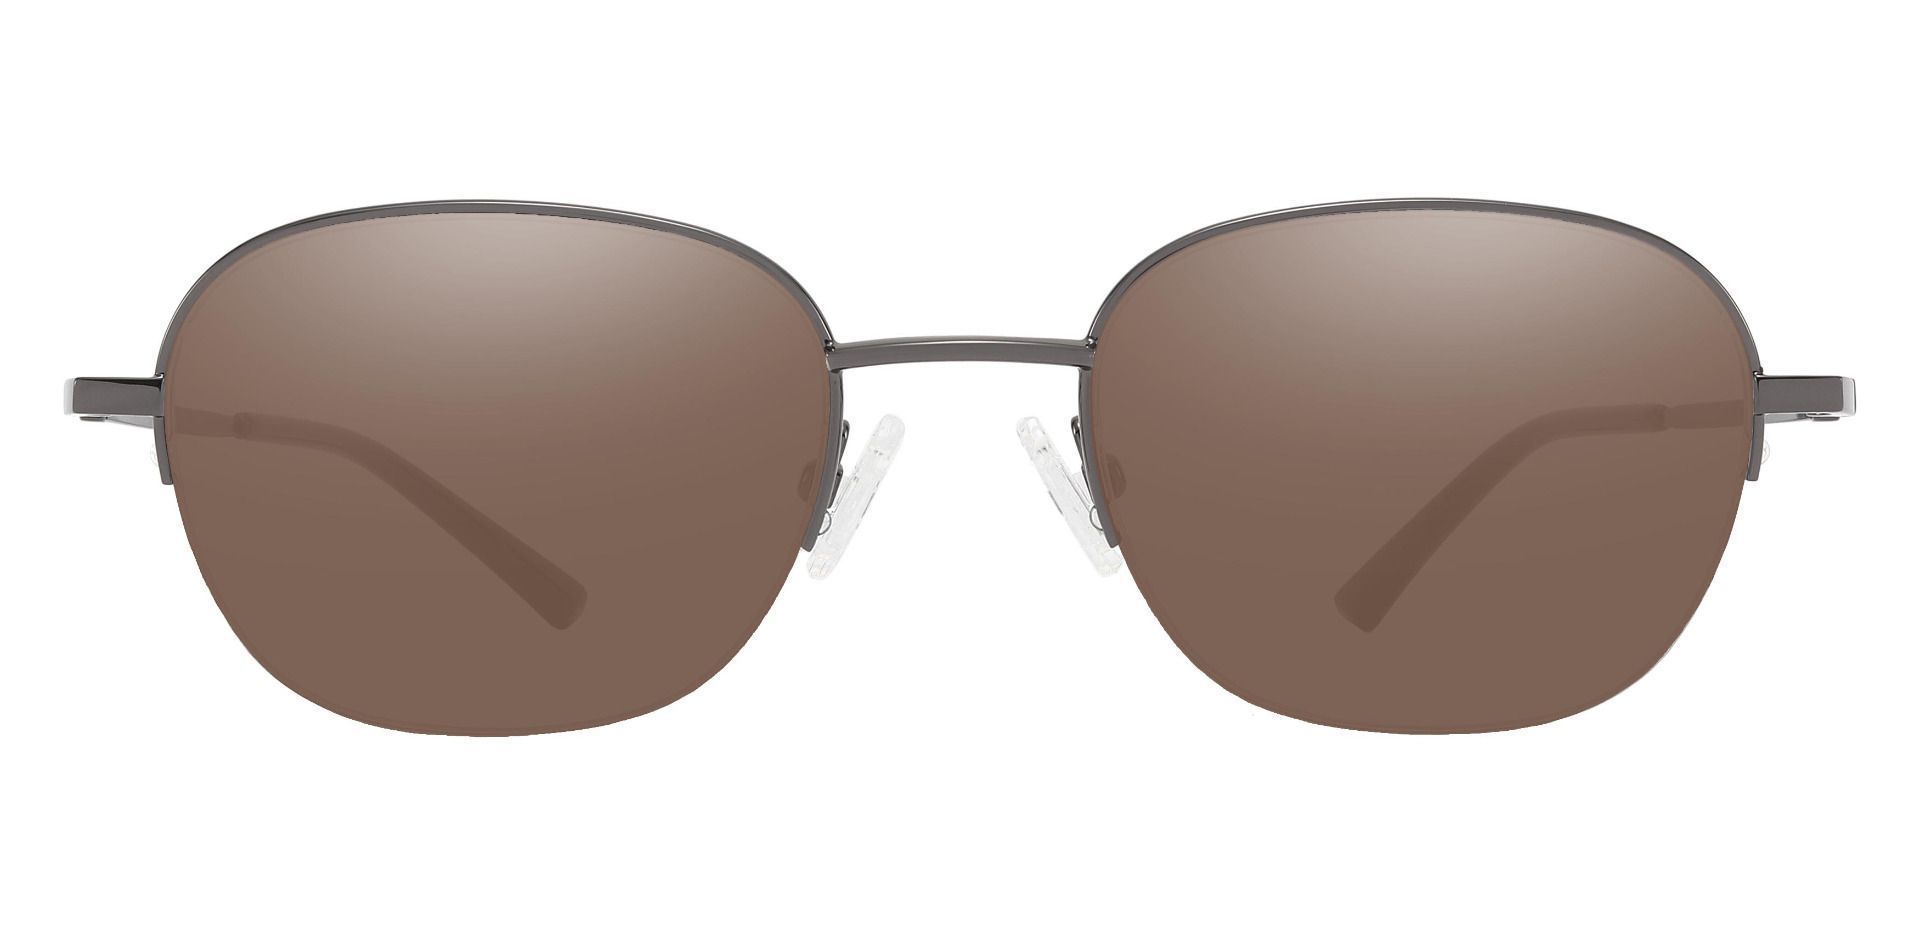 Rochester Oval Progressive Sunglasses - Gray Frame With Brown Lenses